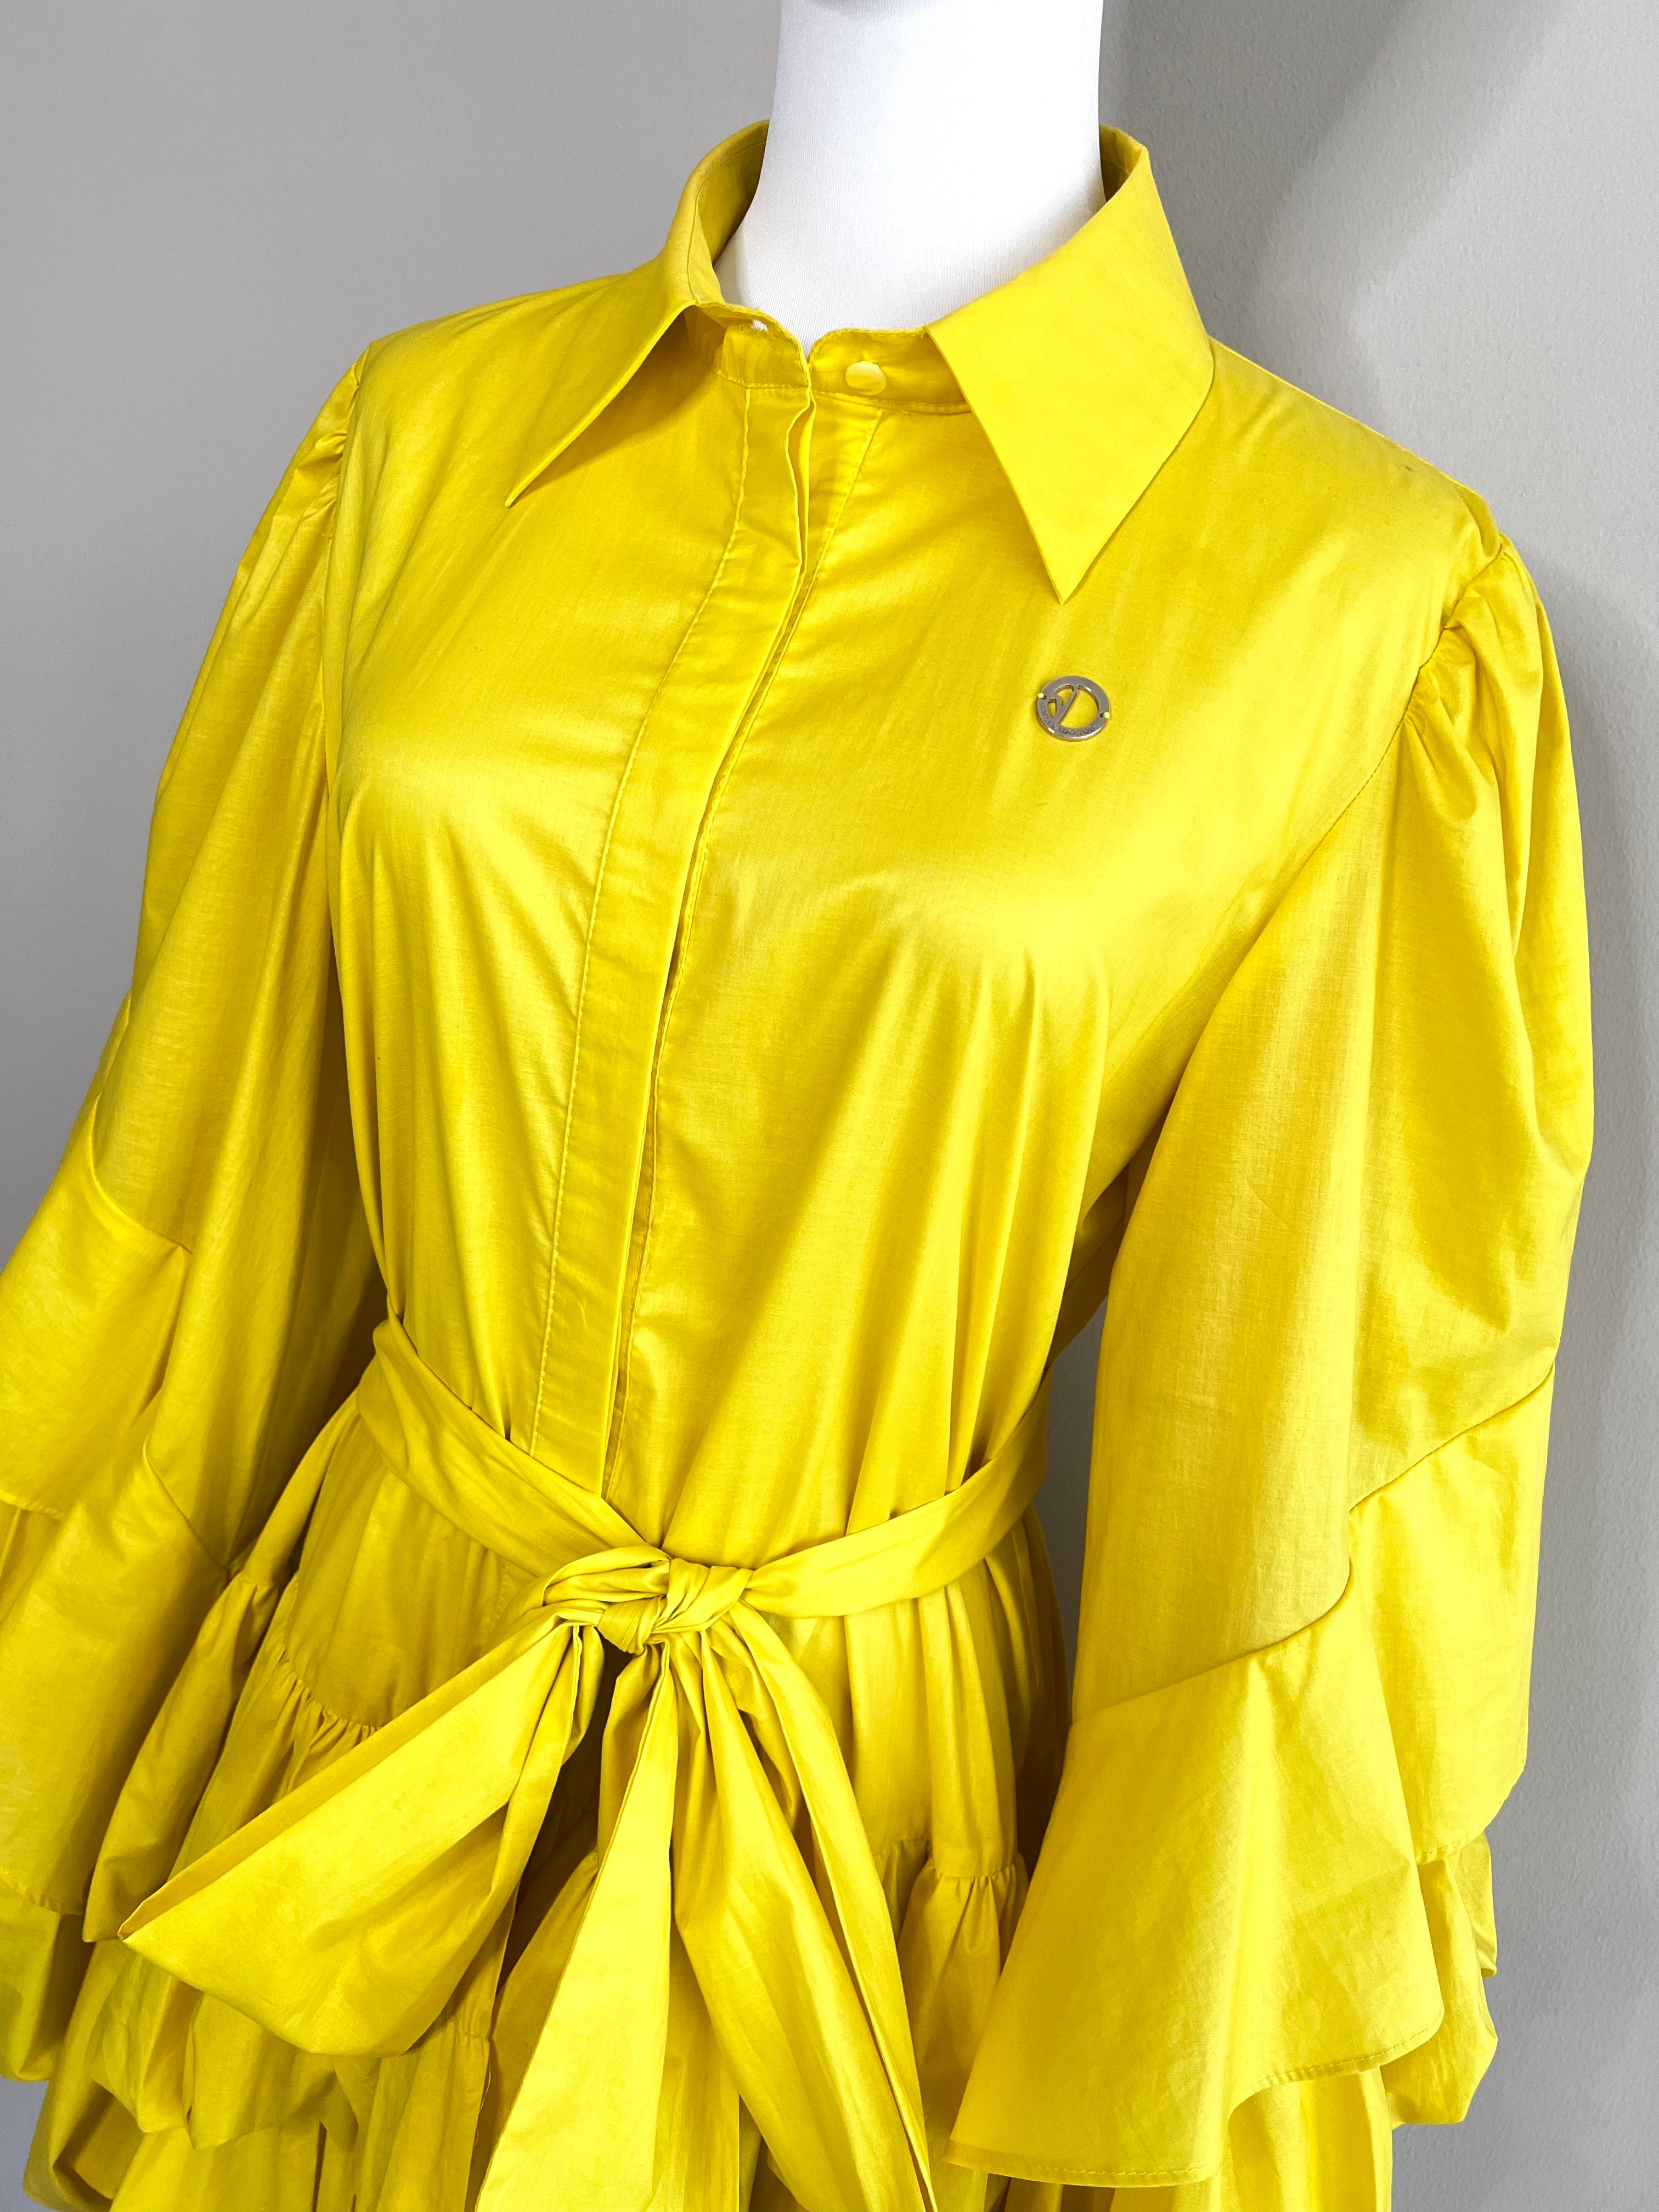 Yellow short semizie balloon dress with impressive sleeves - VALTADOROS